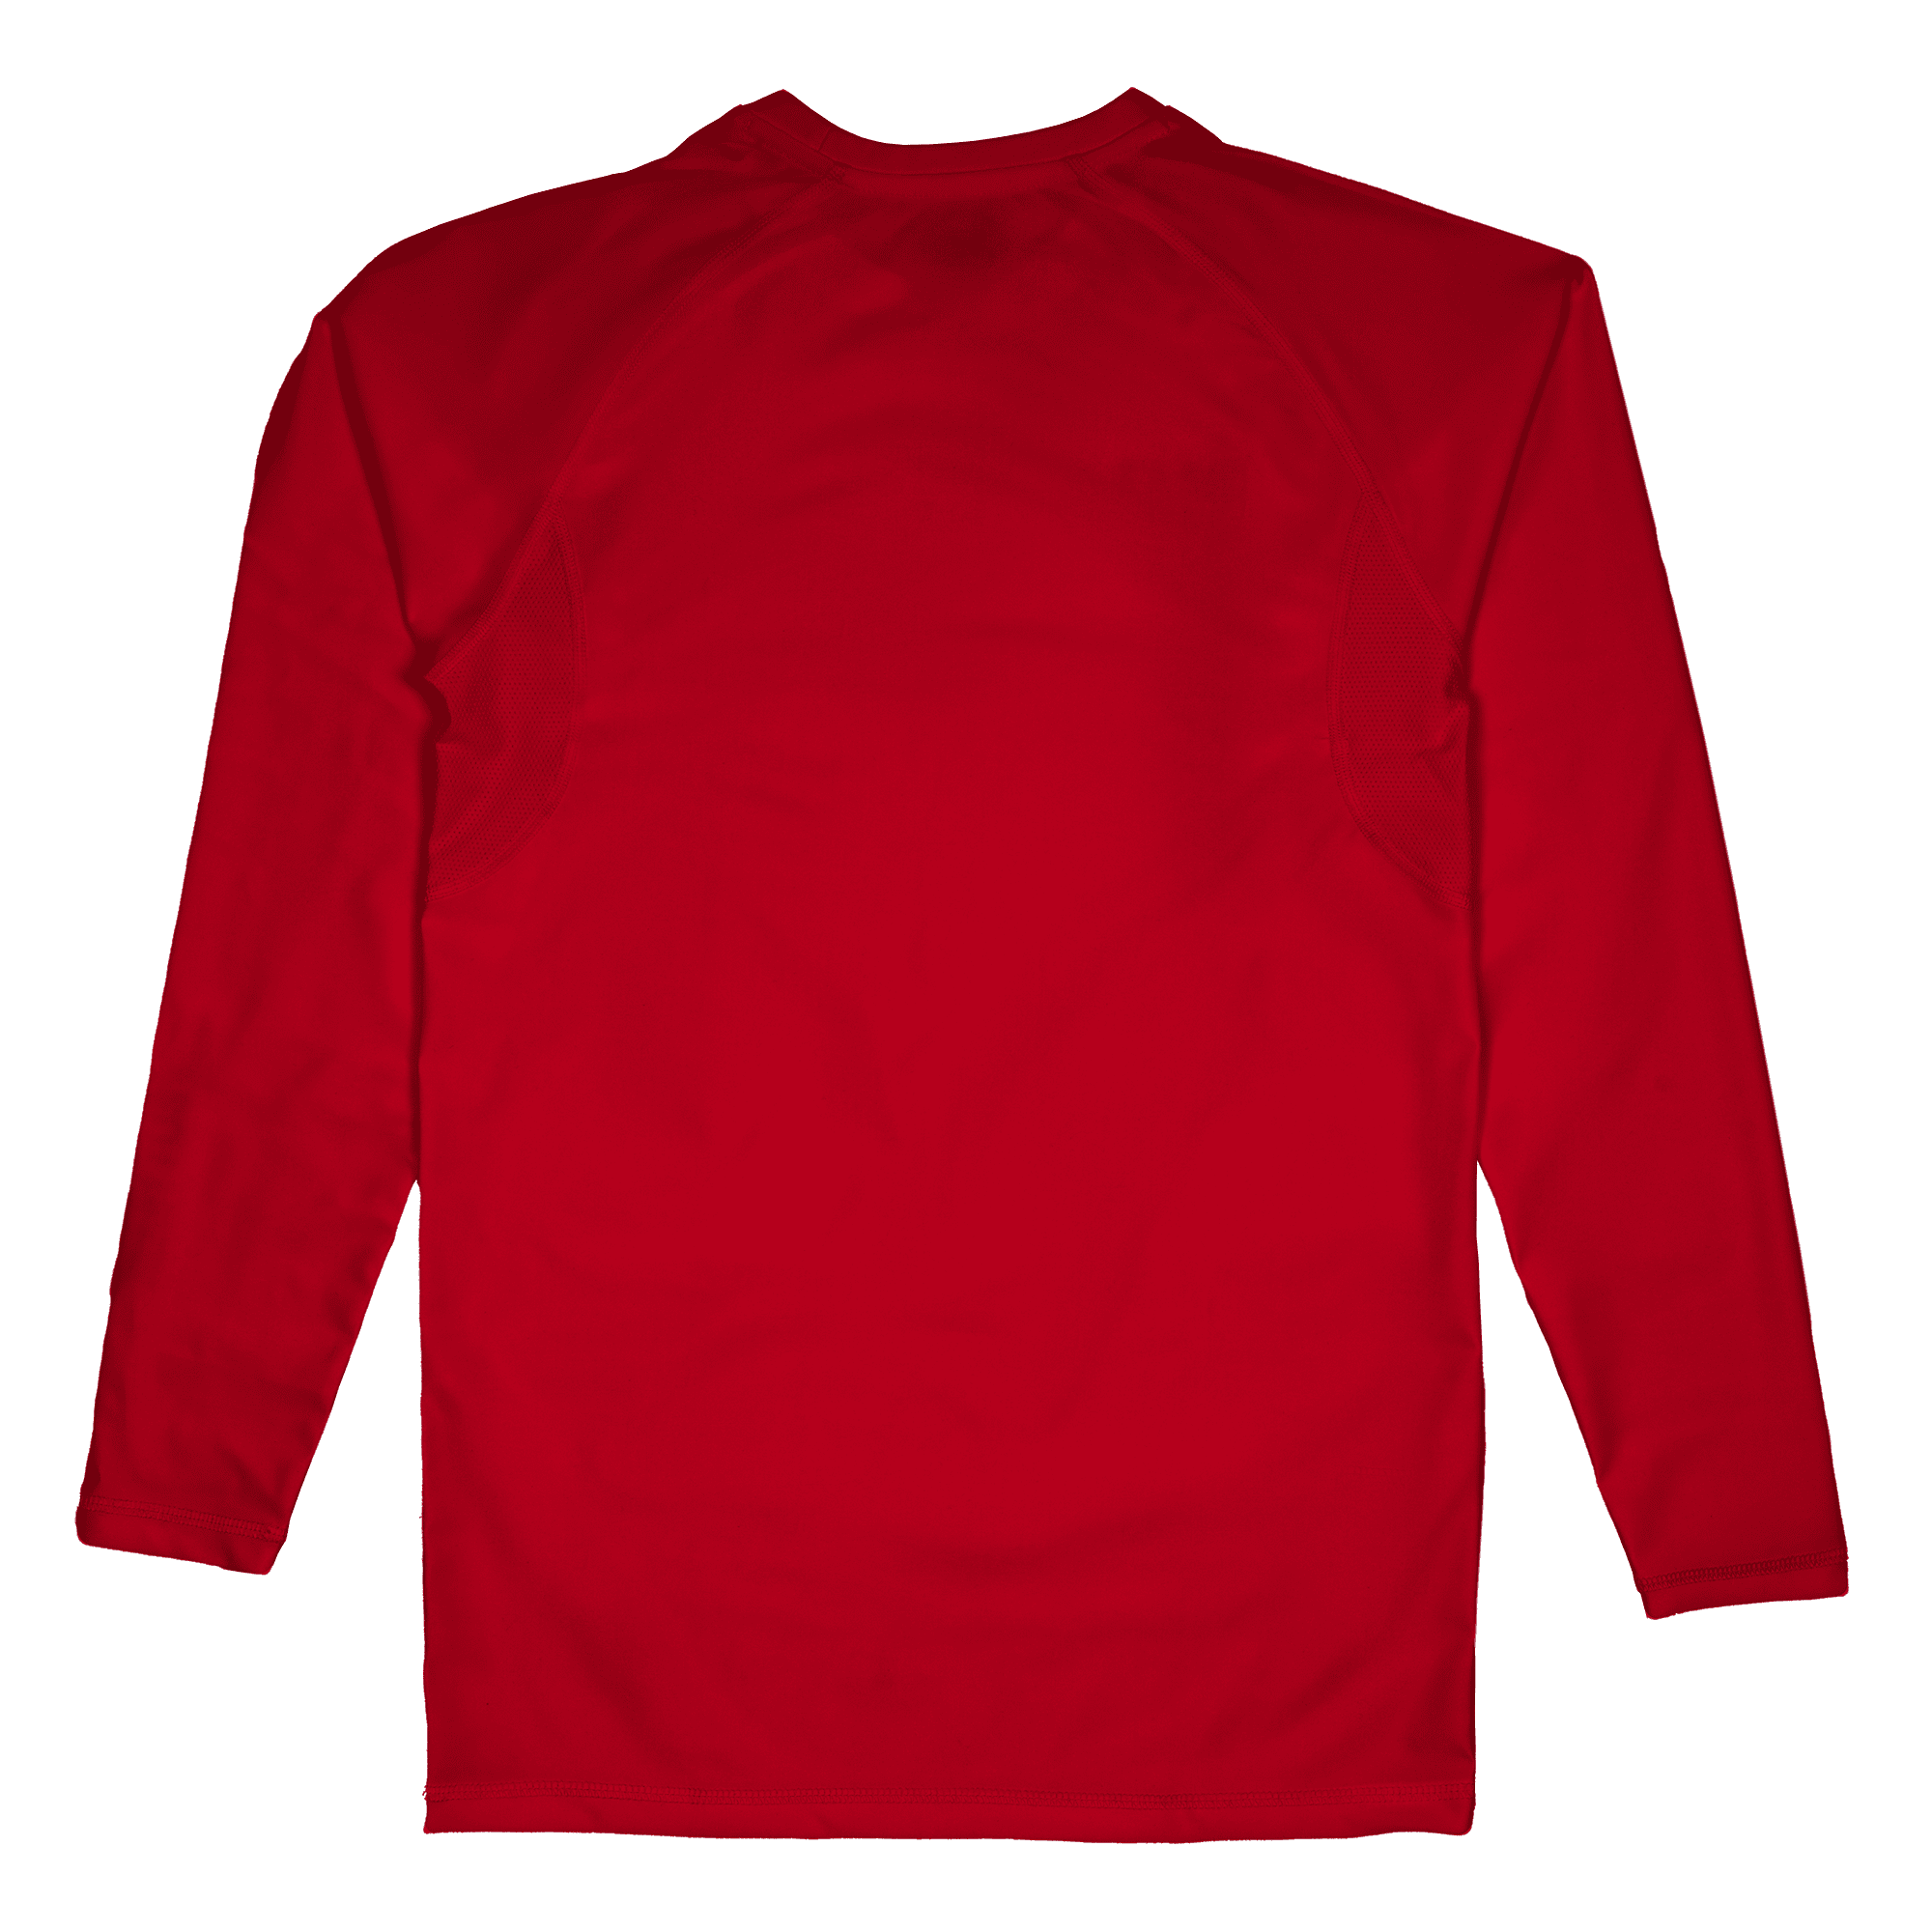 BU1 compression T-shirt red